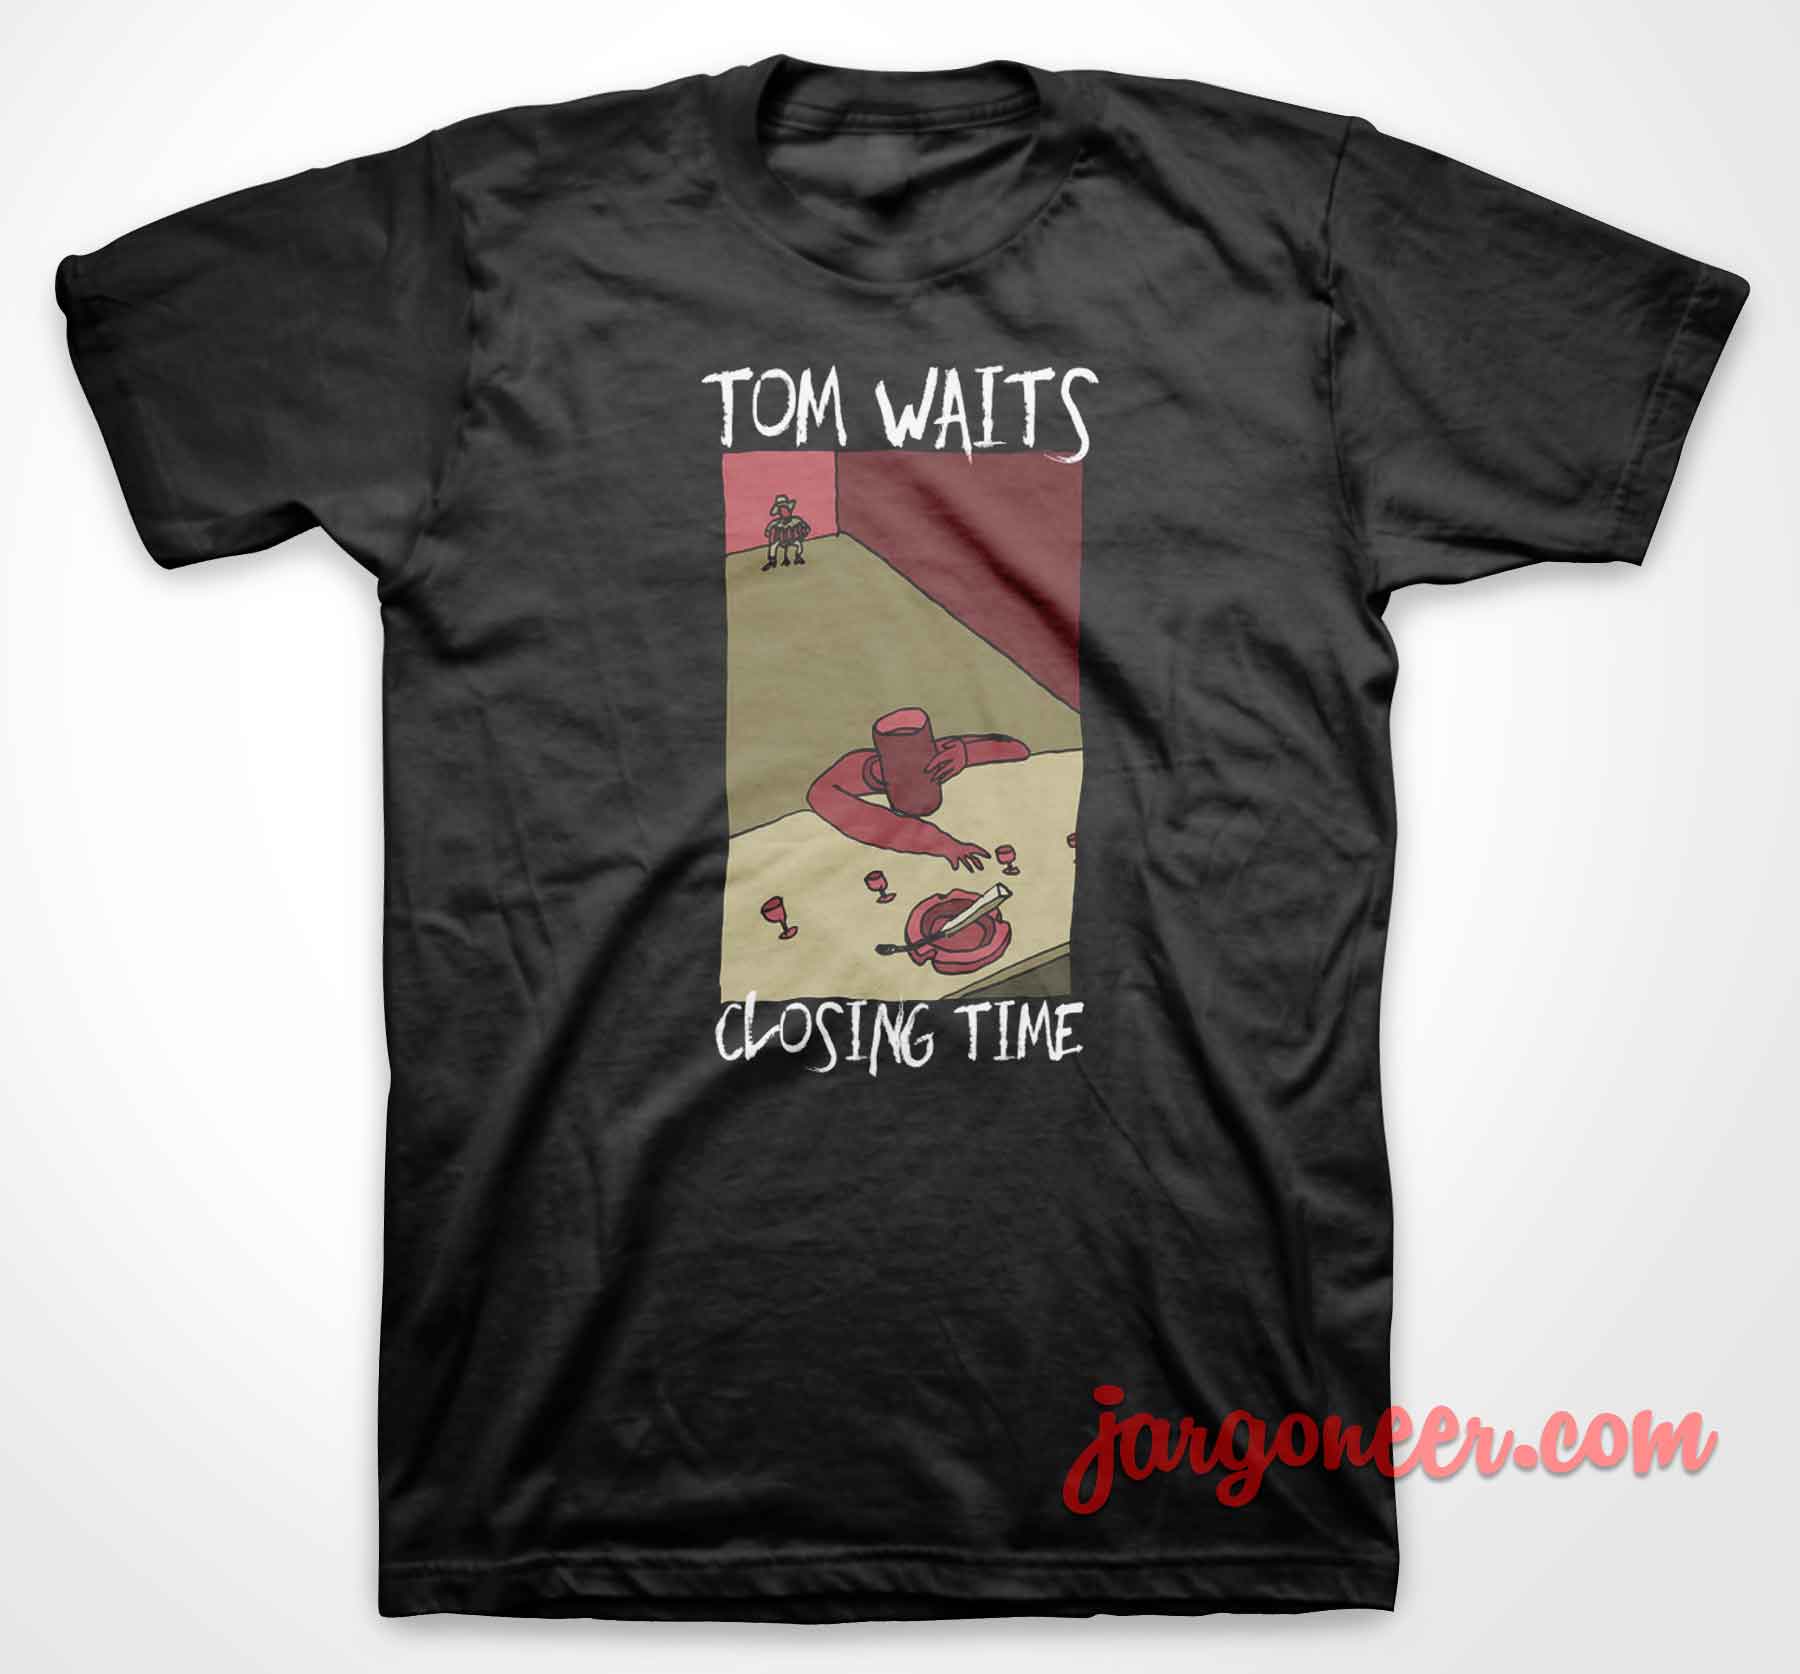 Tom Waits Closing Time 1973 - Shop Unique Graphic Cool Shirt Designs